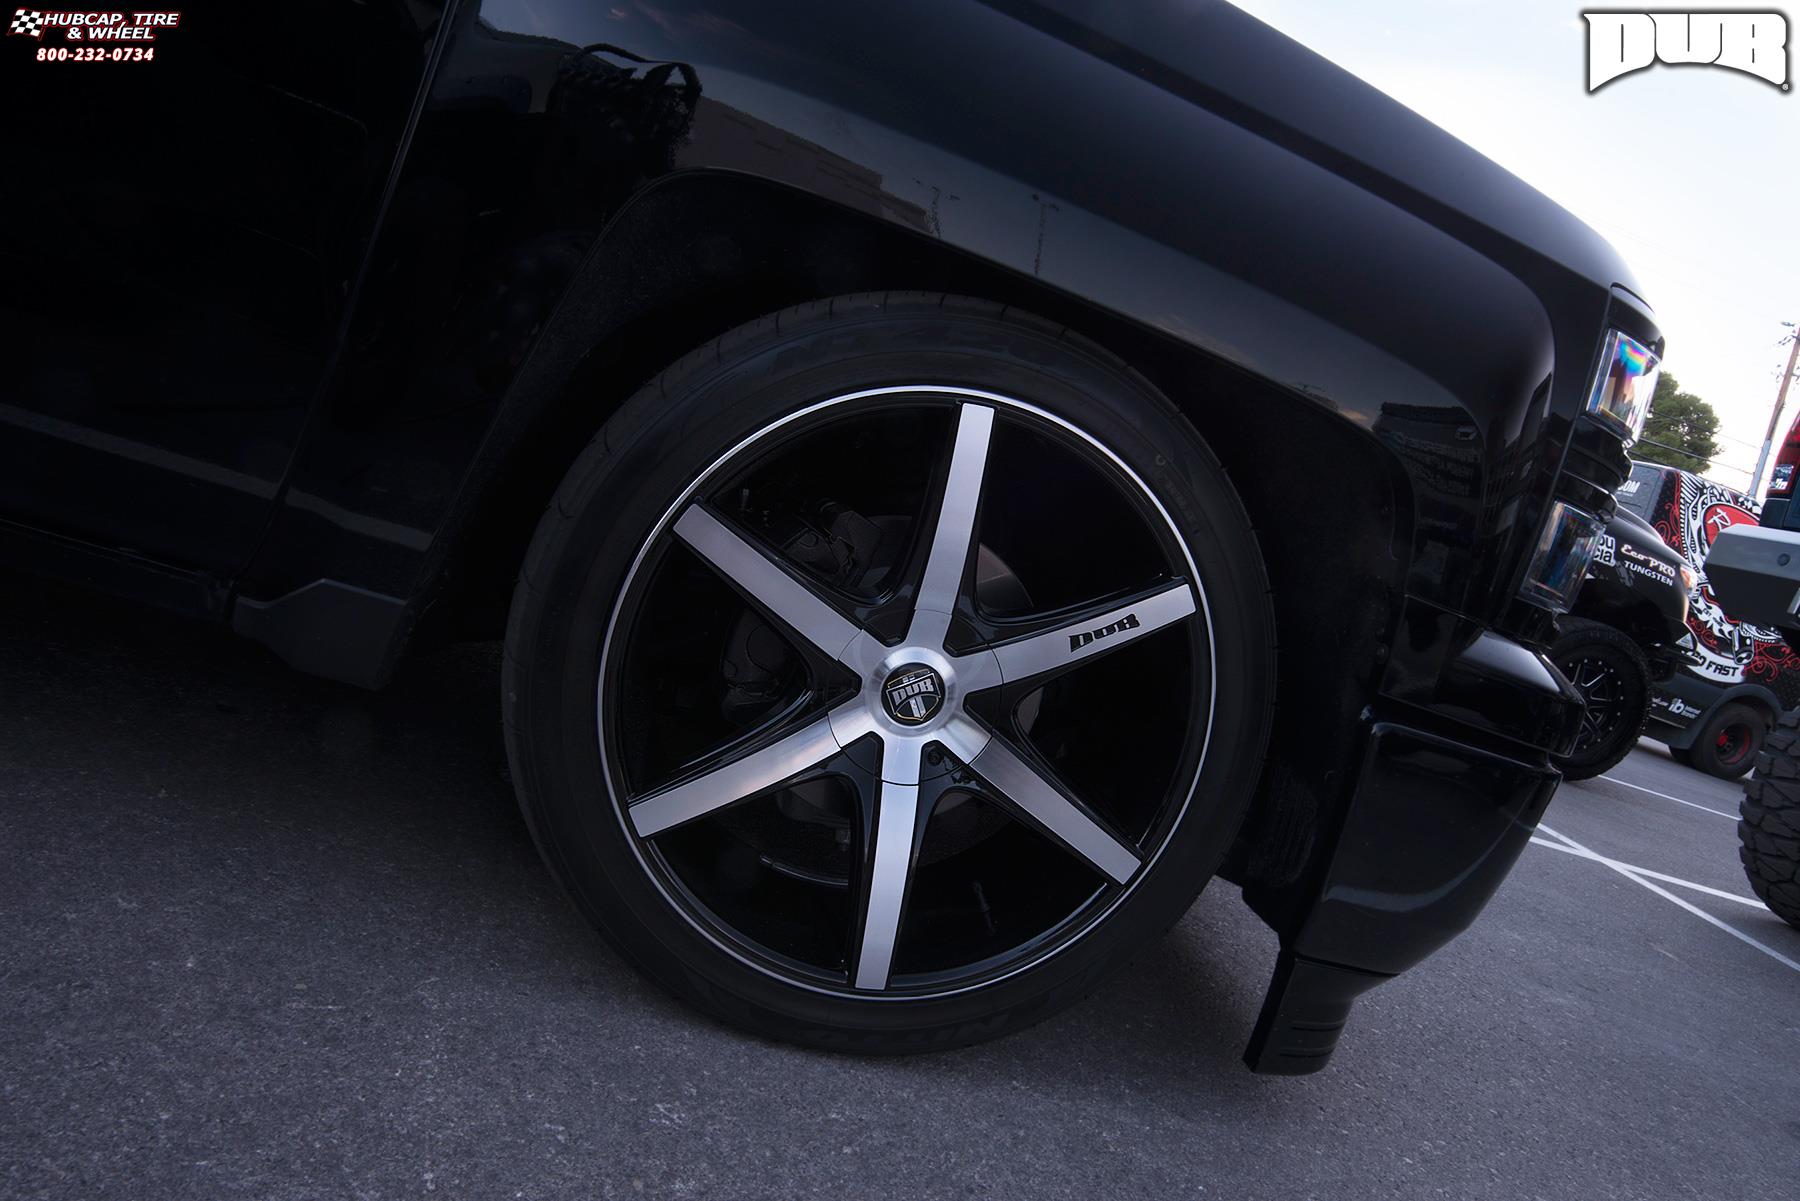 vehicle gallery/chevrolet silverado 1500 dub rio 6 s113 24X9.5  Black & Machined wheels and rims